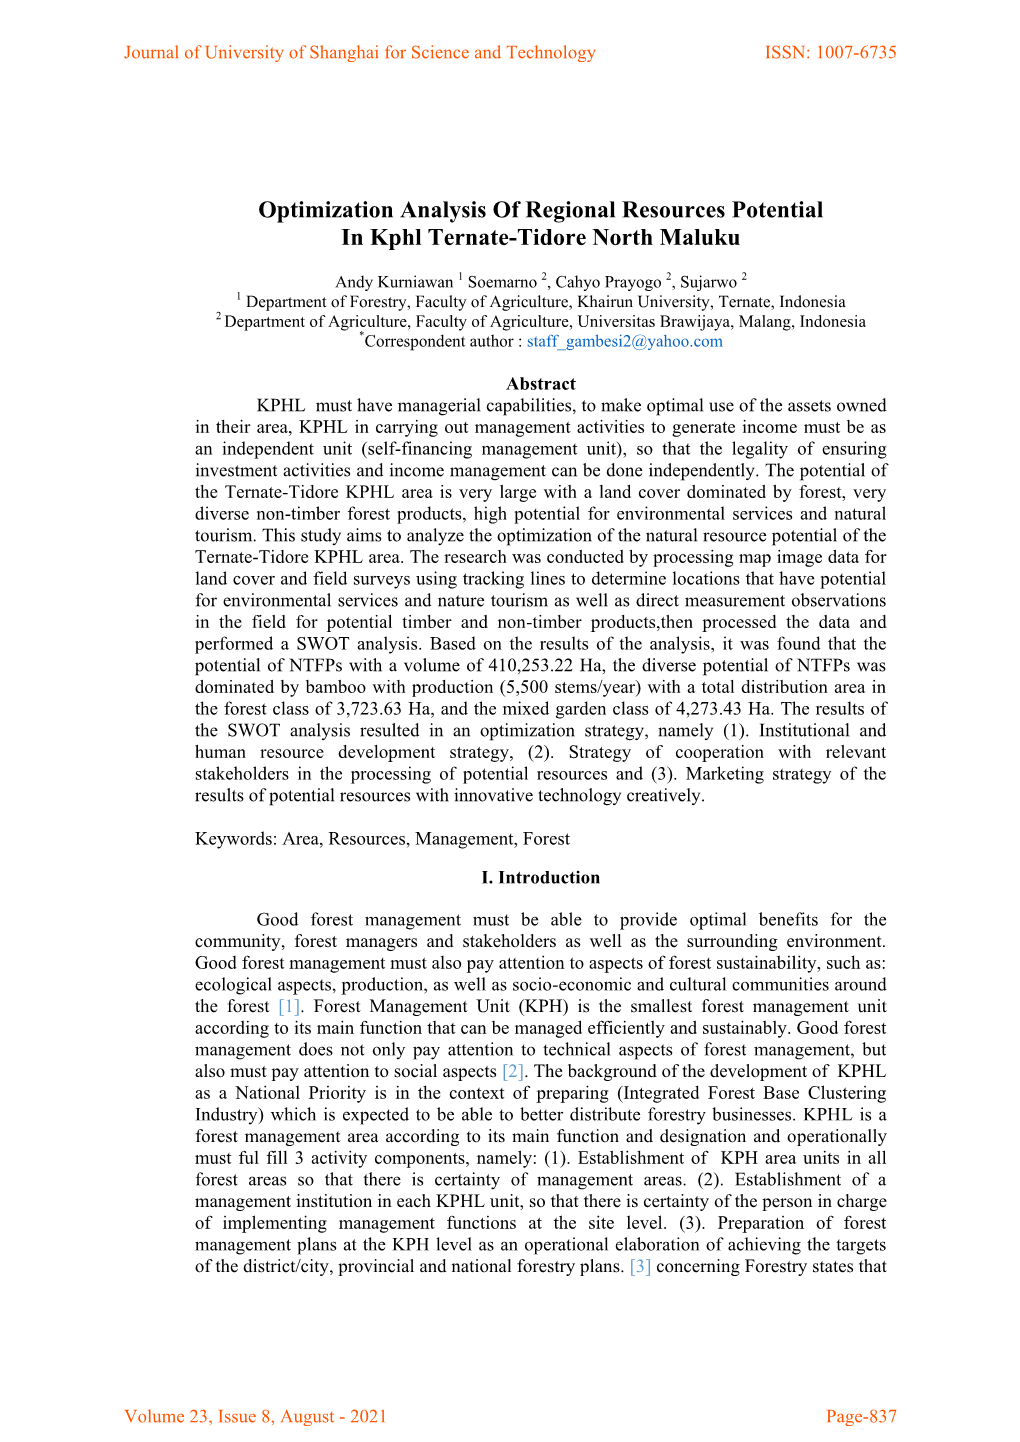 Optimization Analysis of Regional Resources Potential in Kphl Ternate-Tidore North Maluku